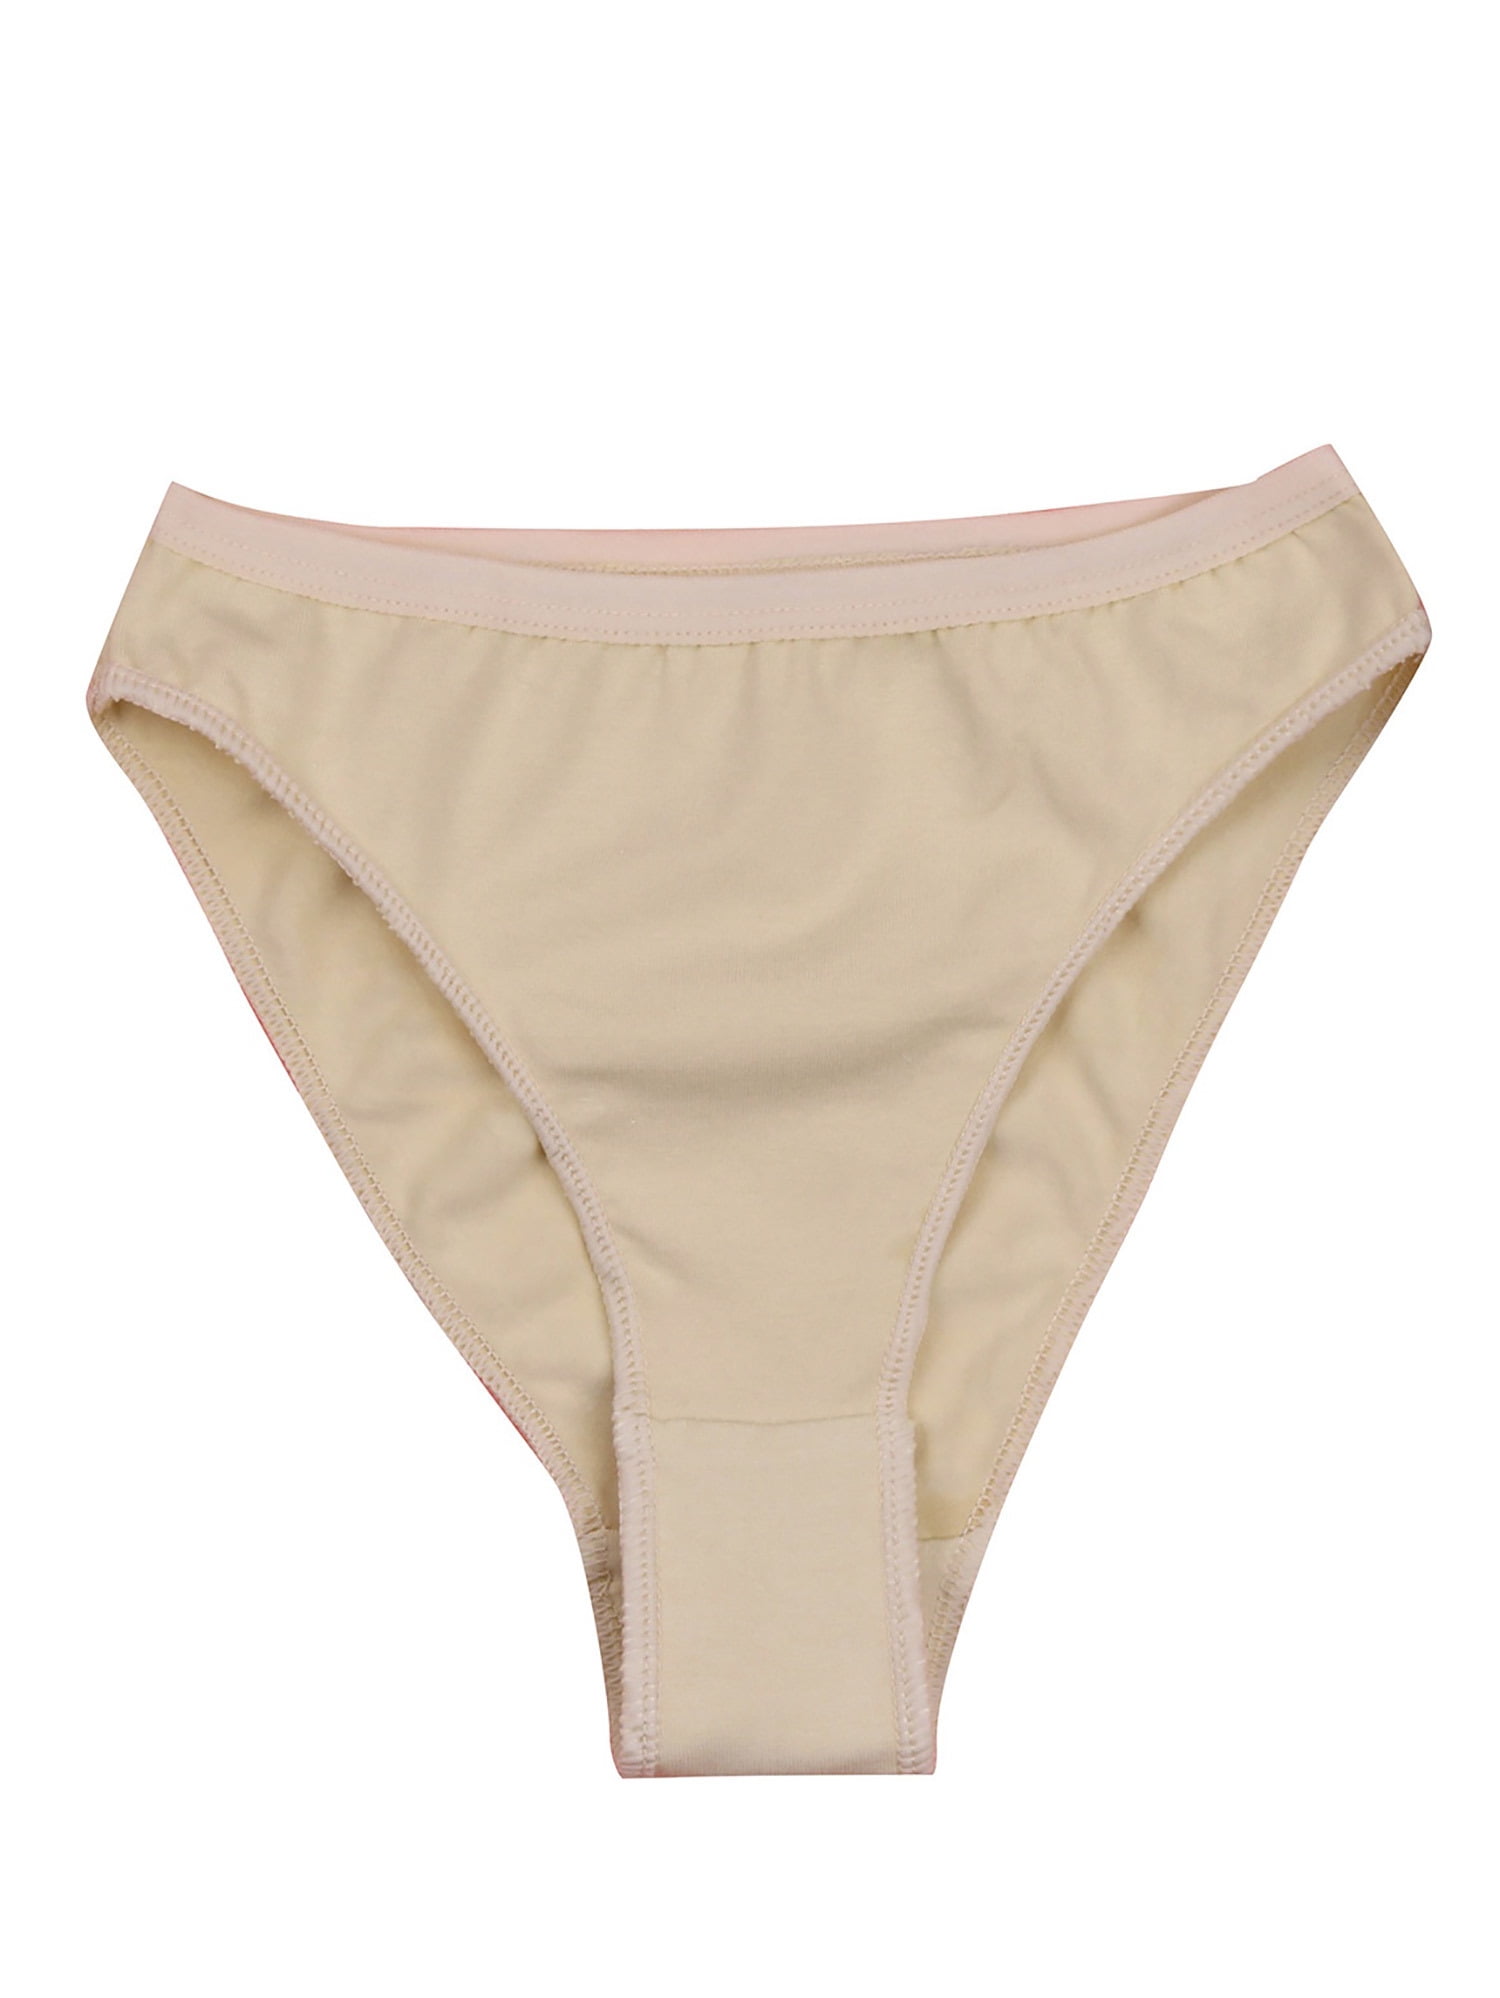 YEAHDOR Kids Girls High Cut Briefs Underwear Underpants for Ballet Dance  Gymnastics Nude 8-10 